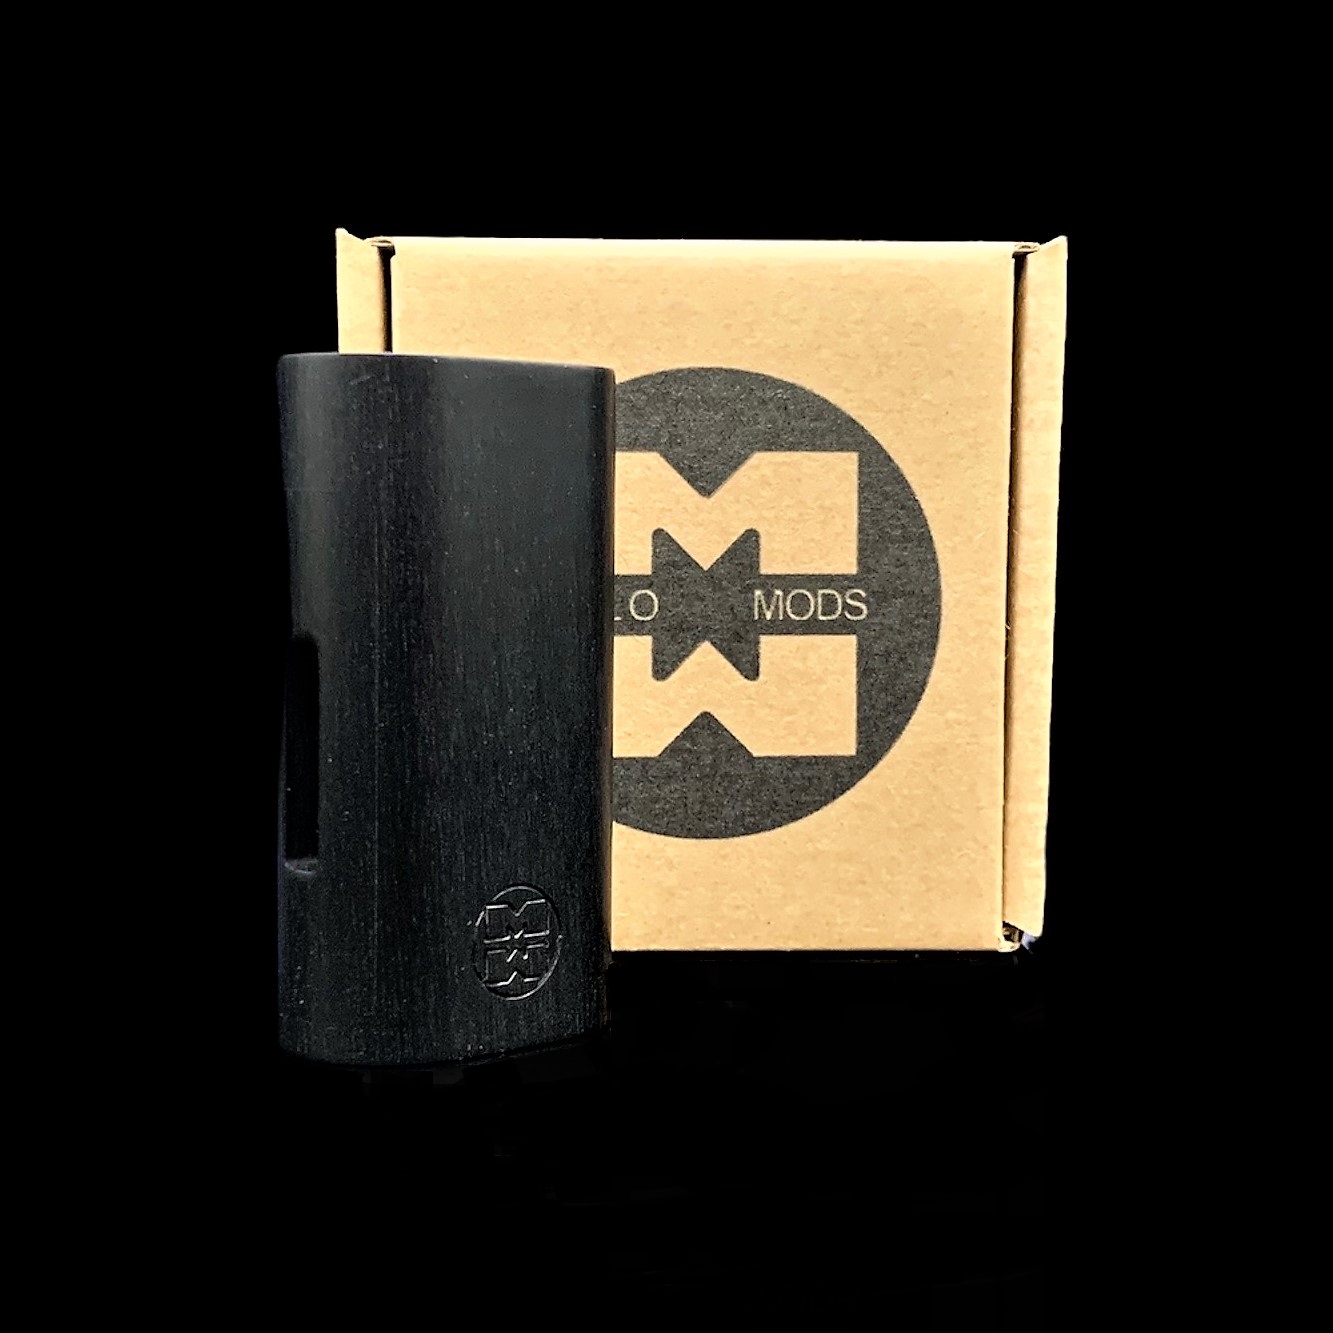 Corona Box Mod #513 - Milo Mods - Atelier del Vapore